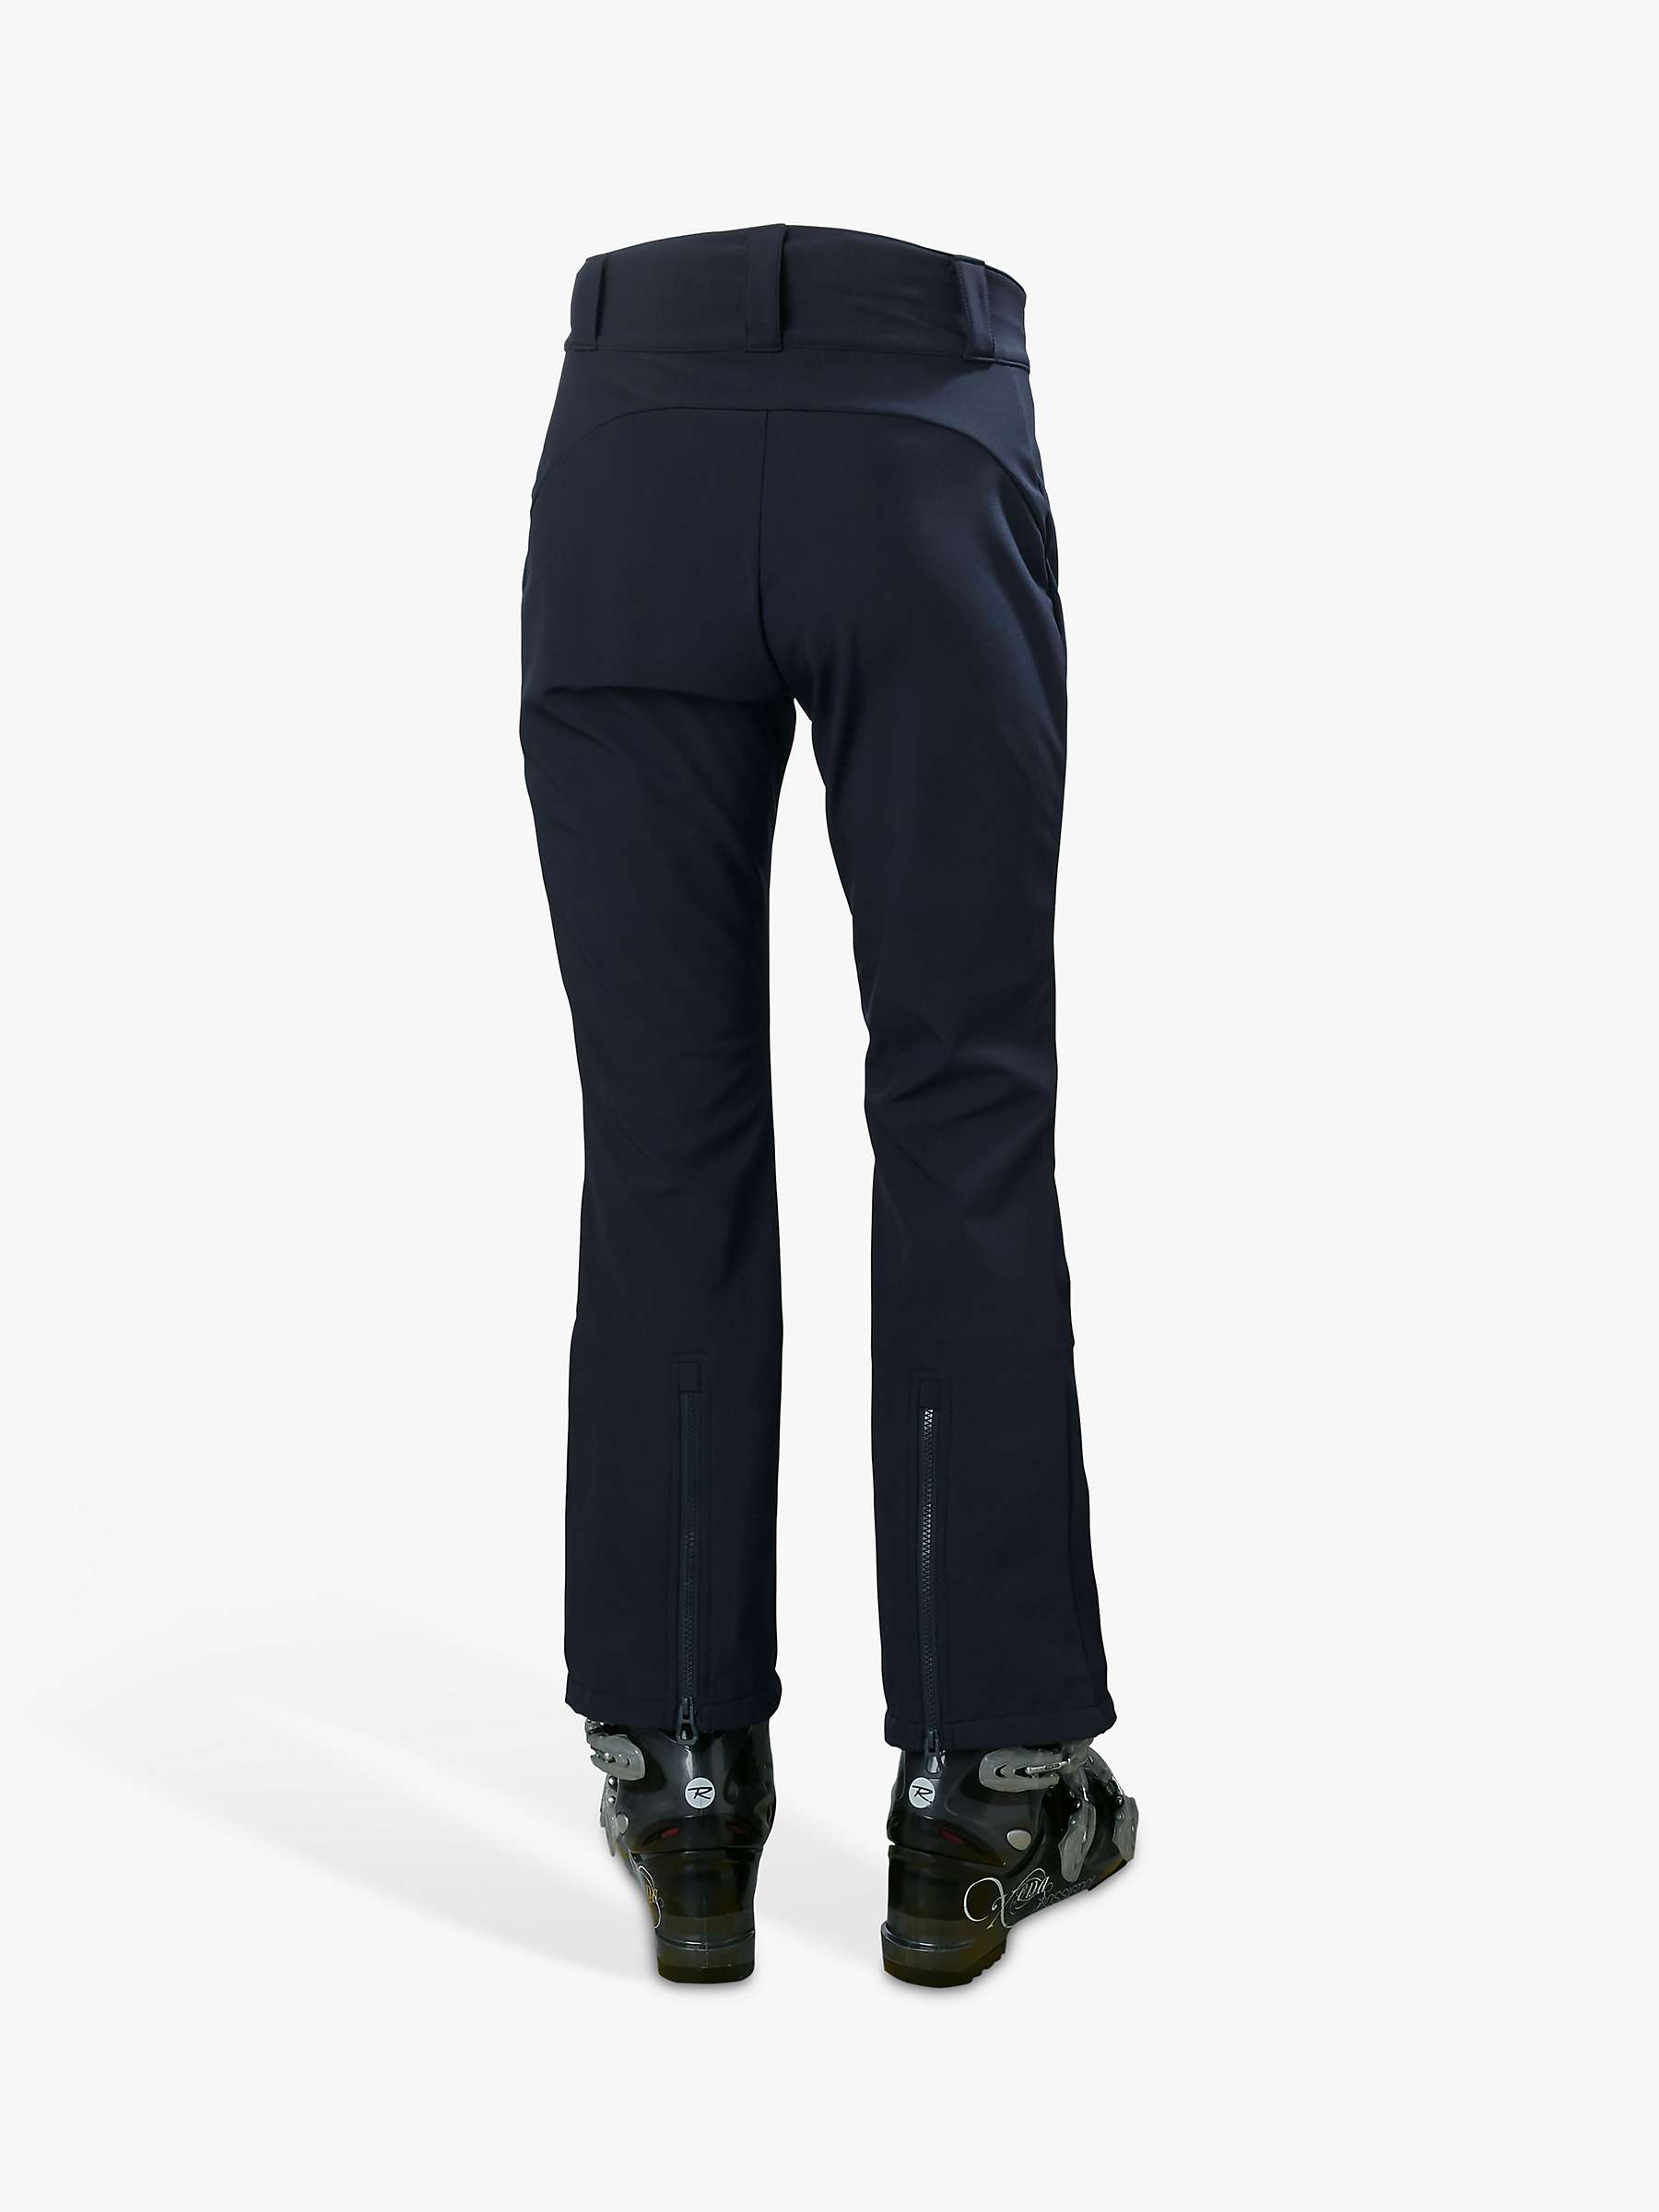 Buy Helly Hansen Bellisim Insulated Women's Ski Trousers, Navy Online at johnlewis.com